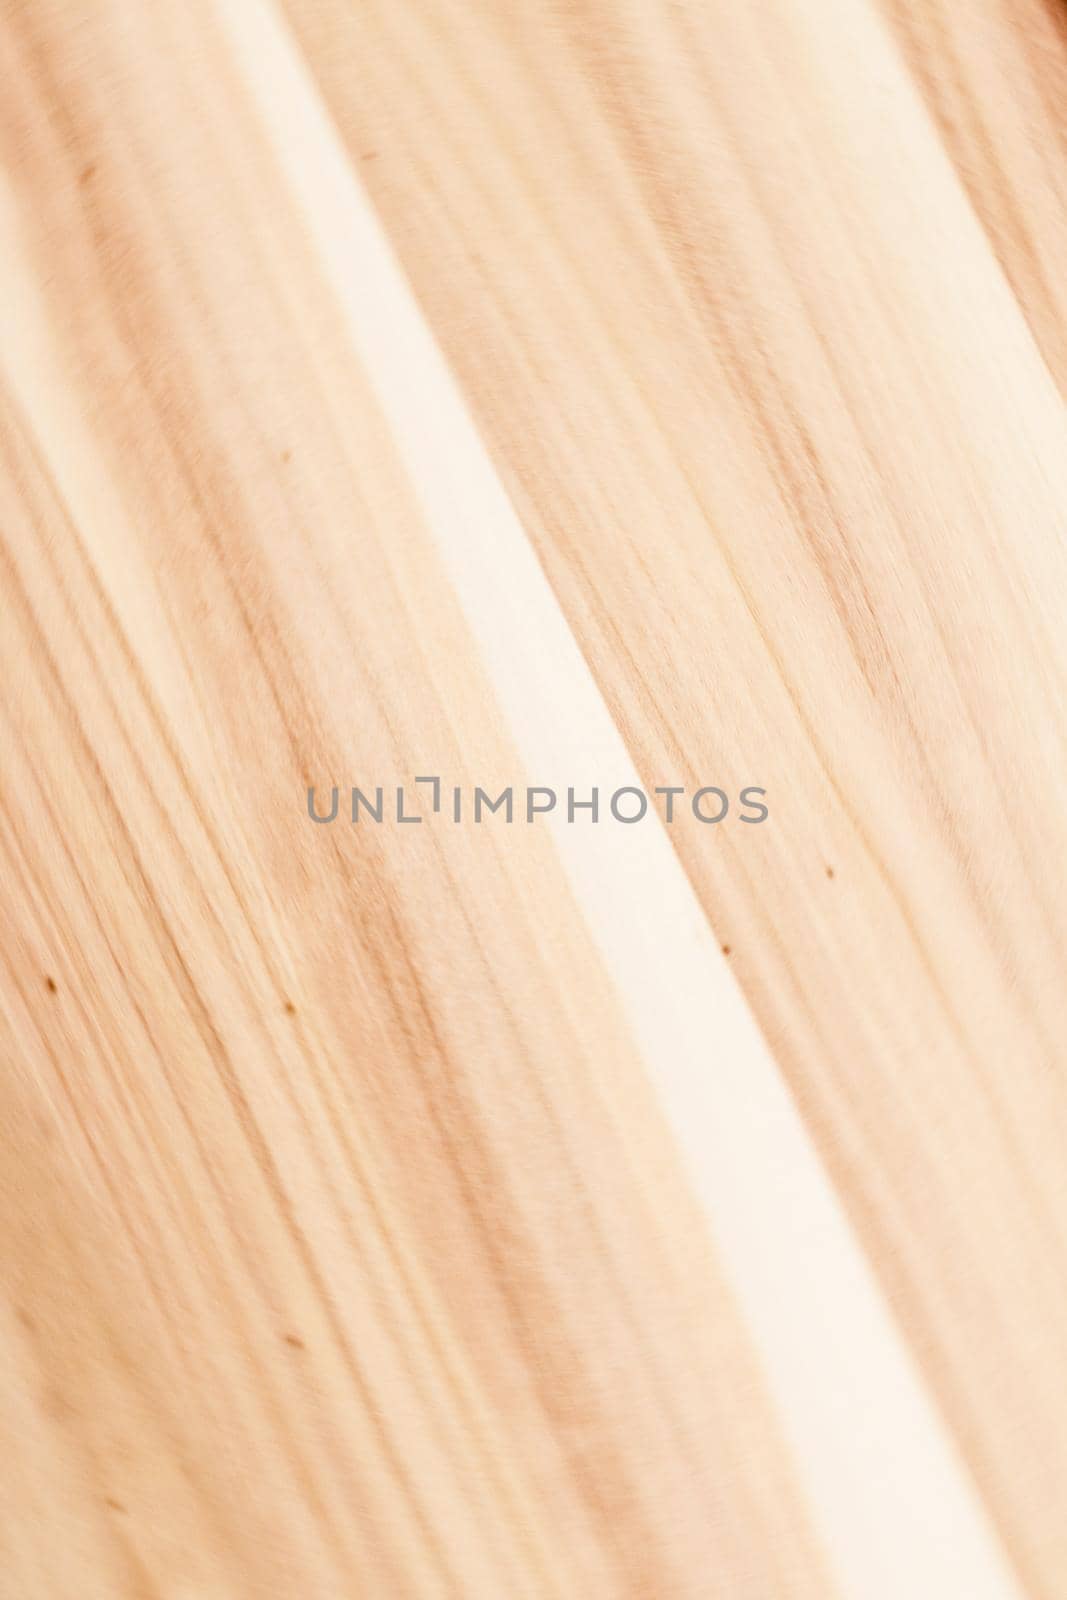 Wooden plank textured background by Anneleven